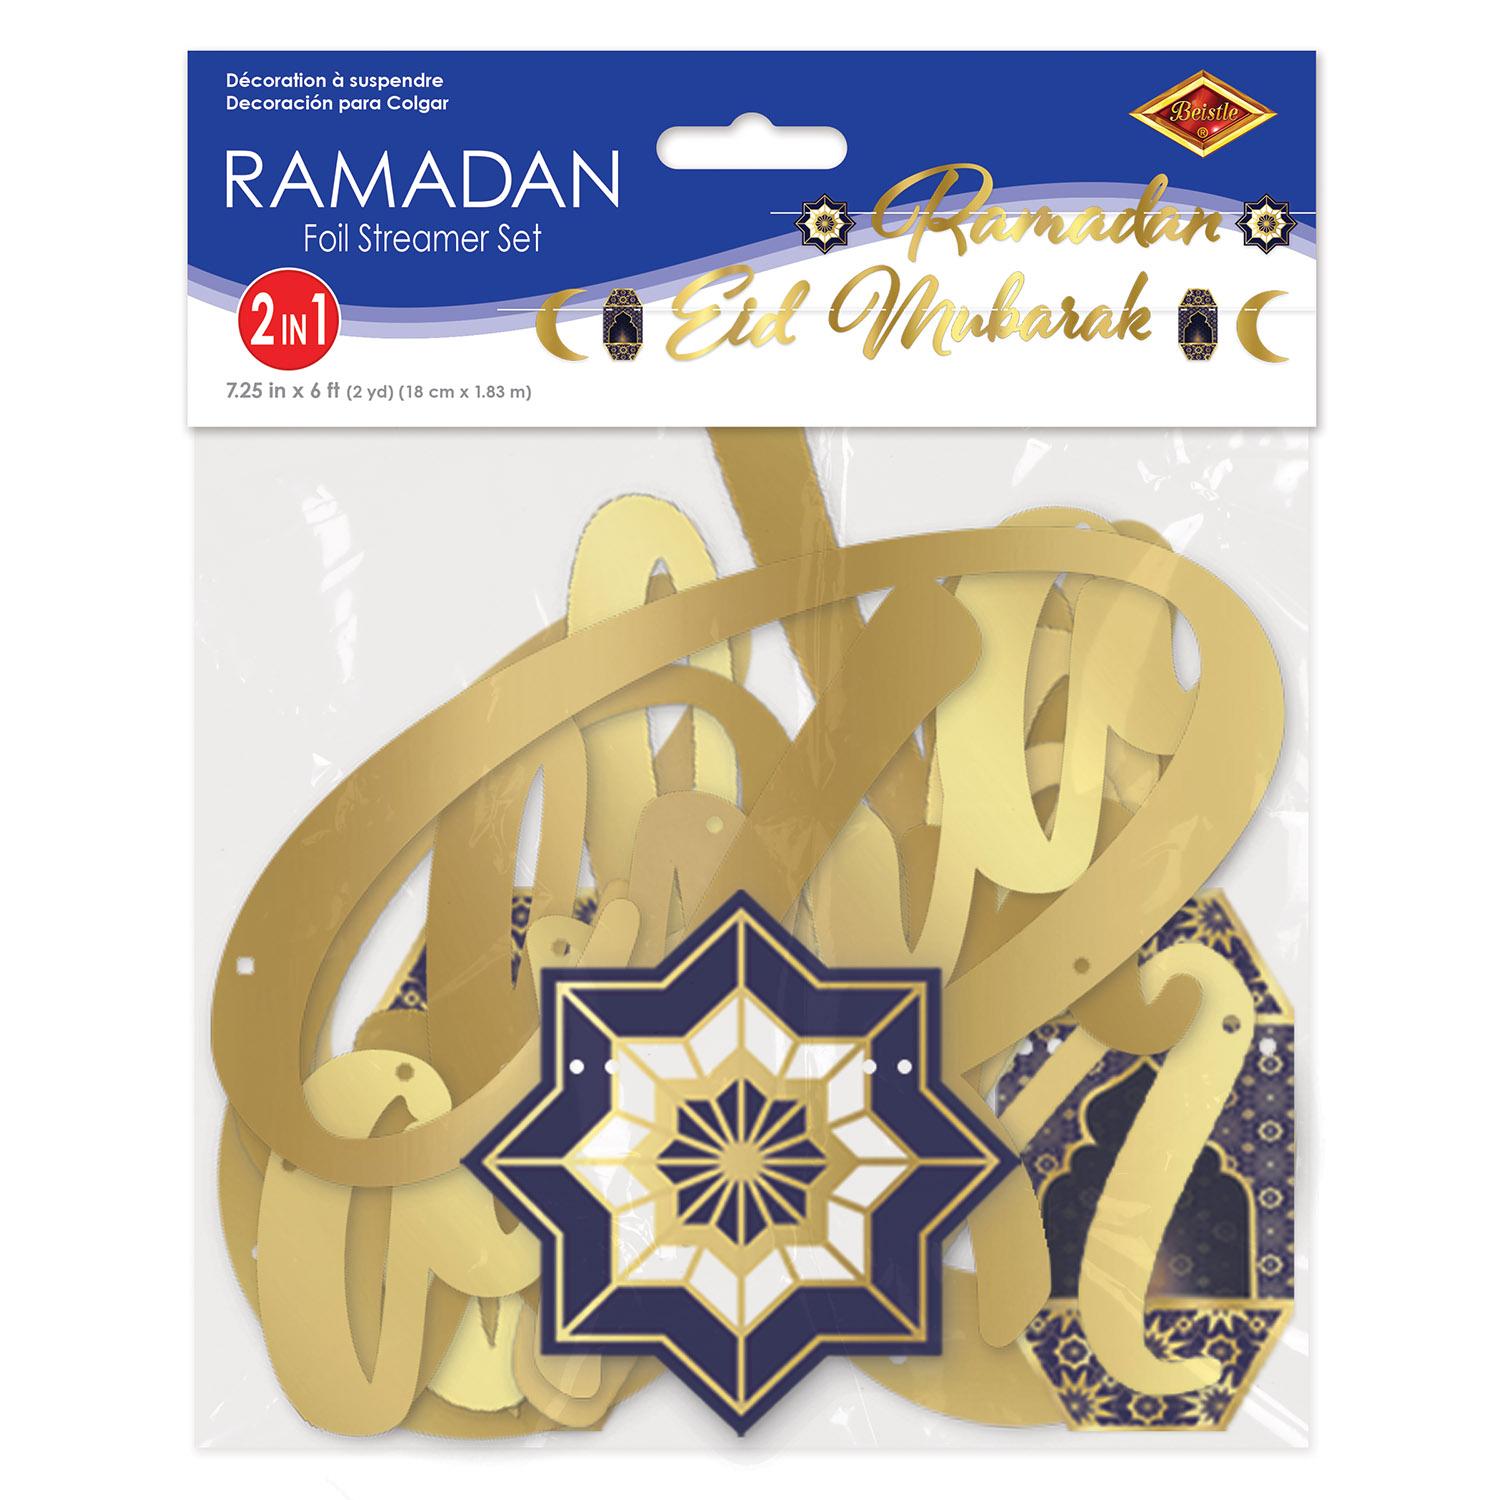 Beistle Foil Ramadan Streamer Set